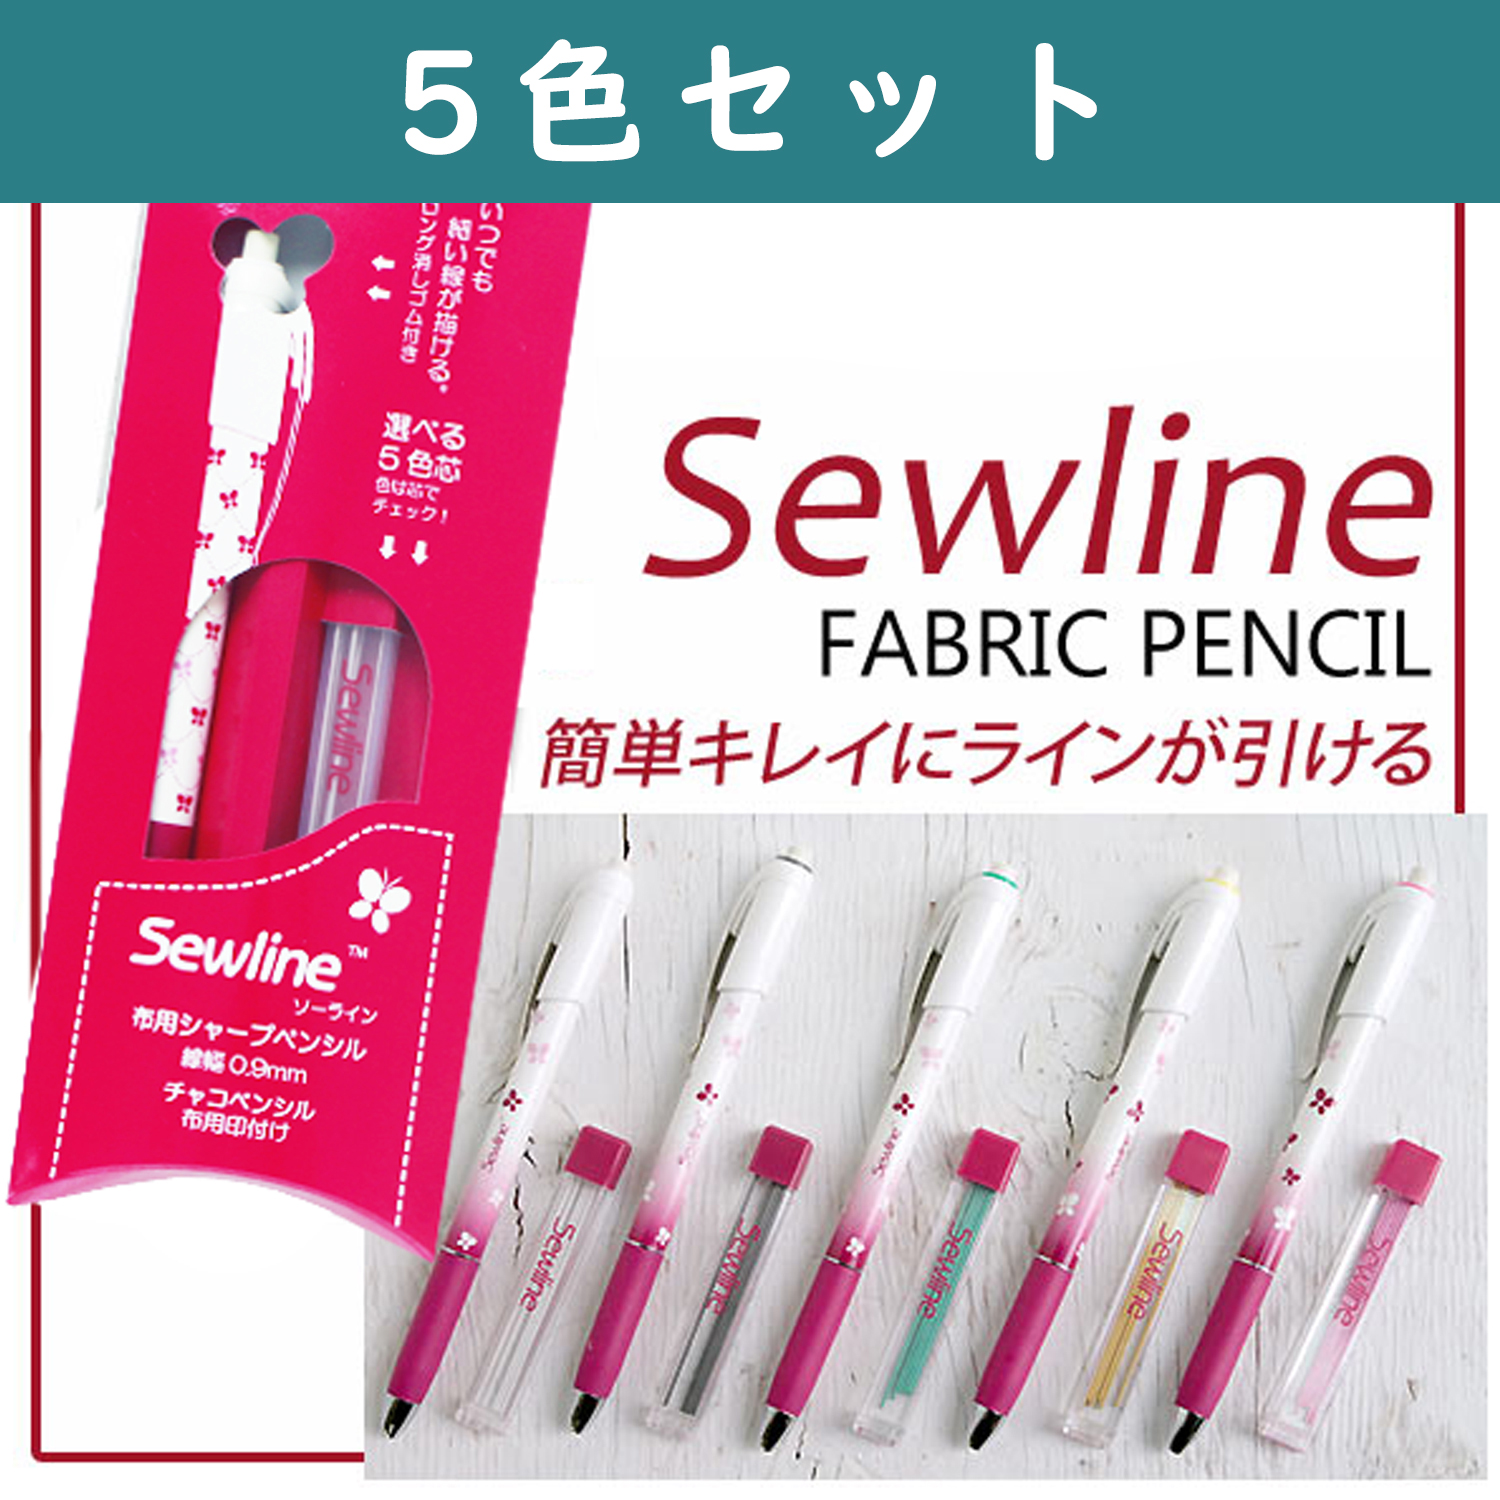 SEW-SYAPU-5 Sewline Mechanical Pencil・Pencil ", 5 color set (set)